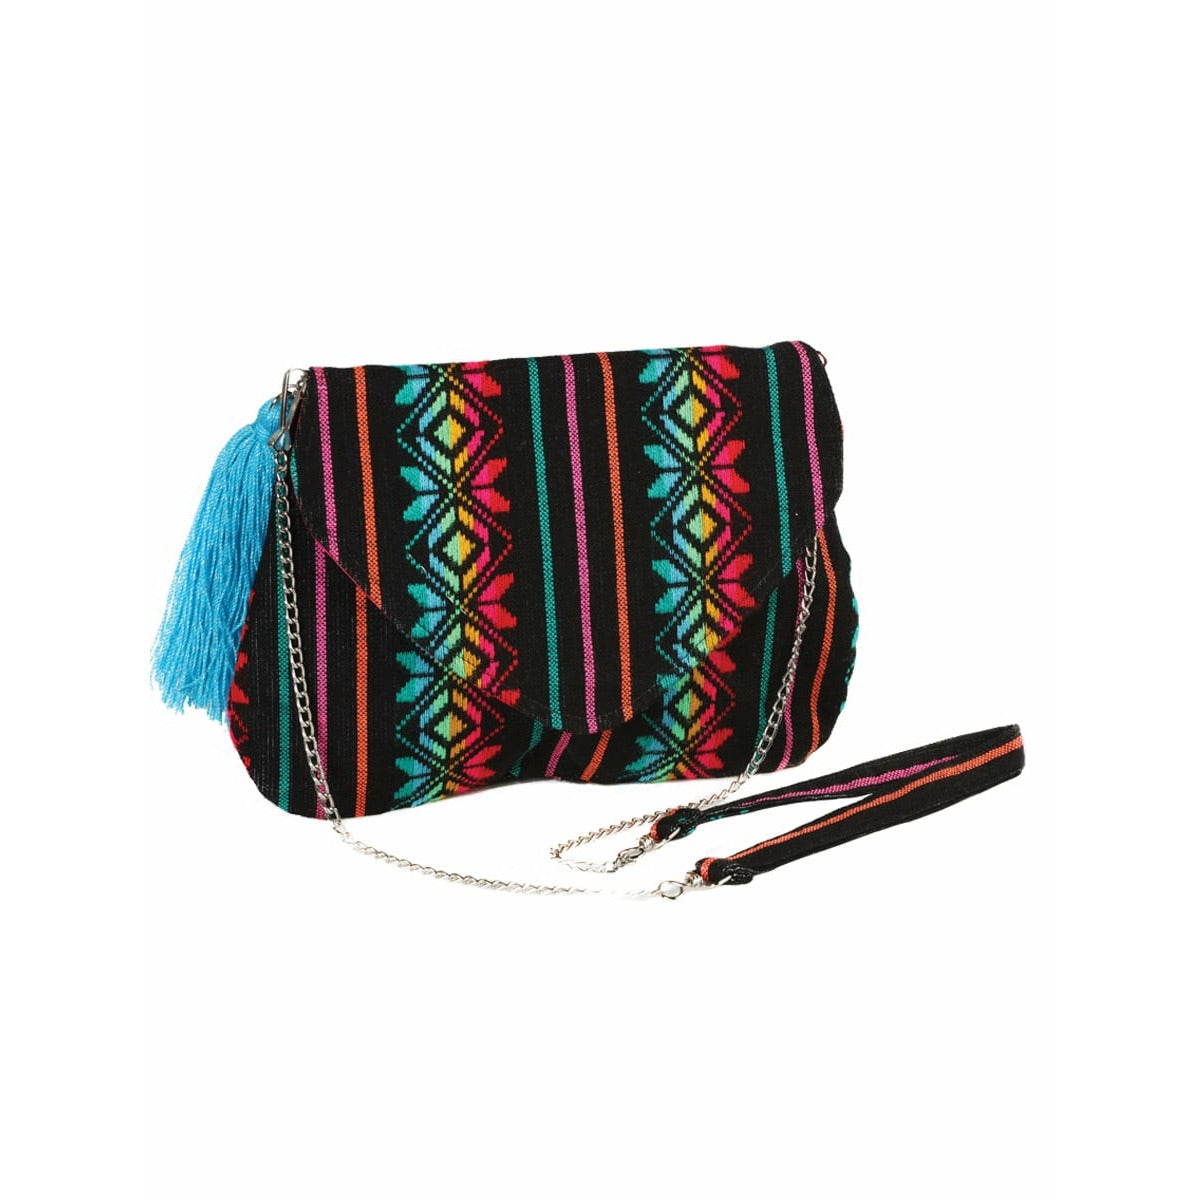 Hand made Mexican Bag - CharroAzteca.com